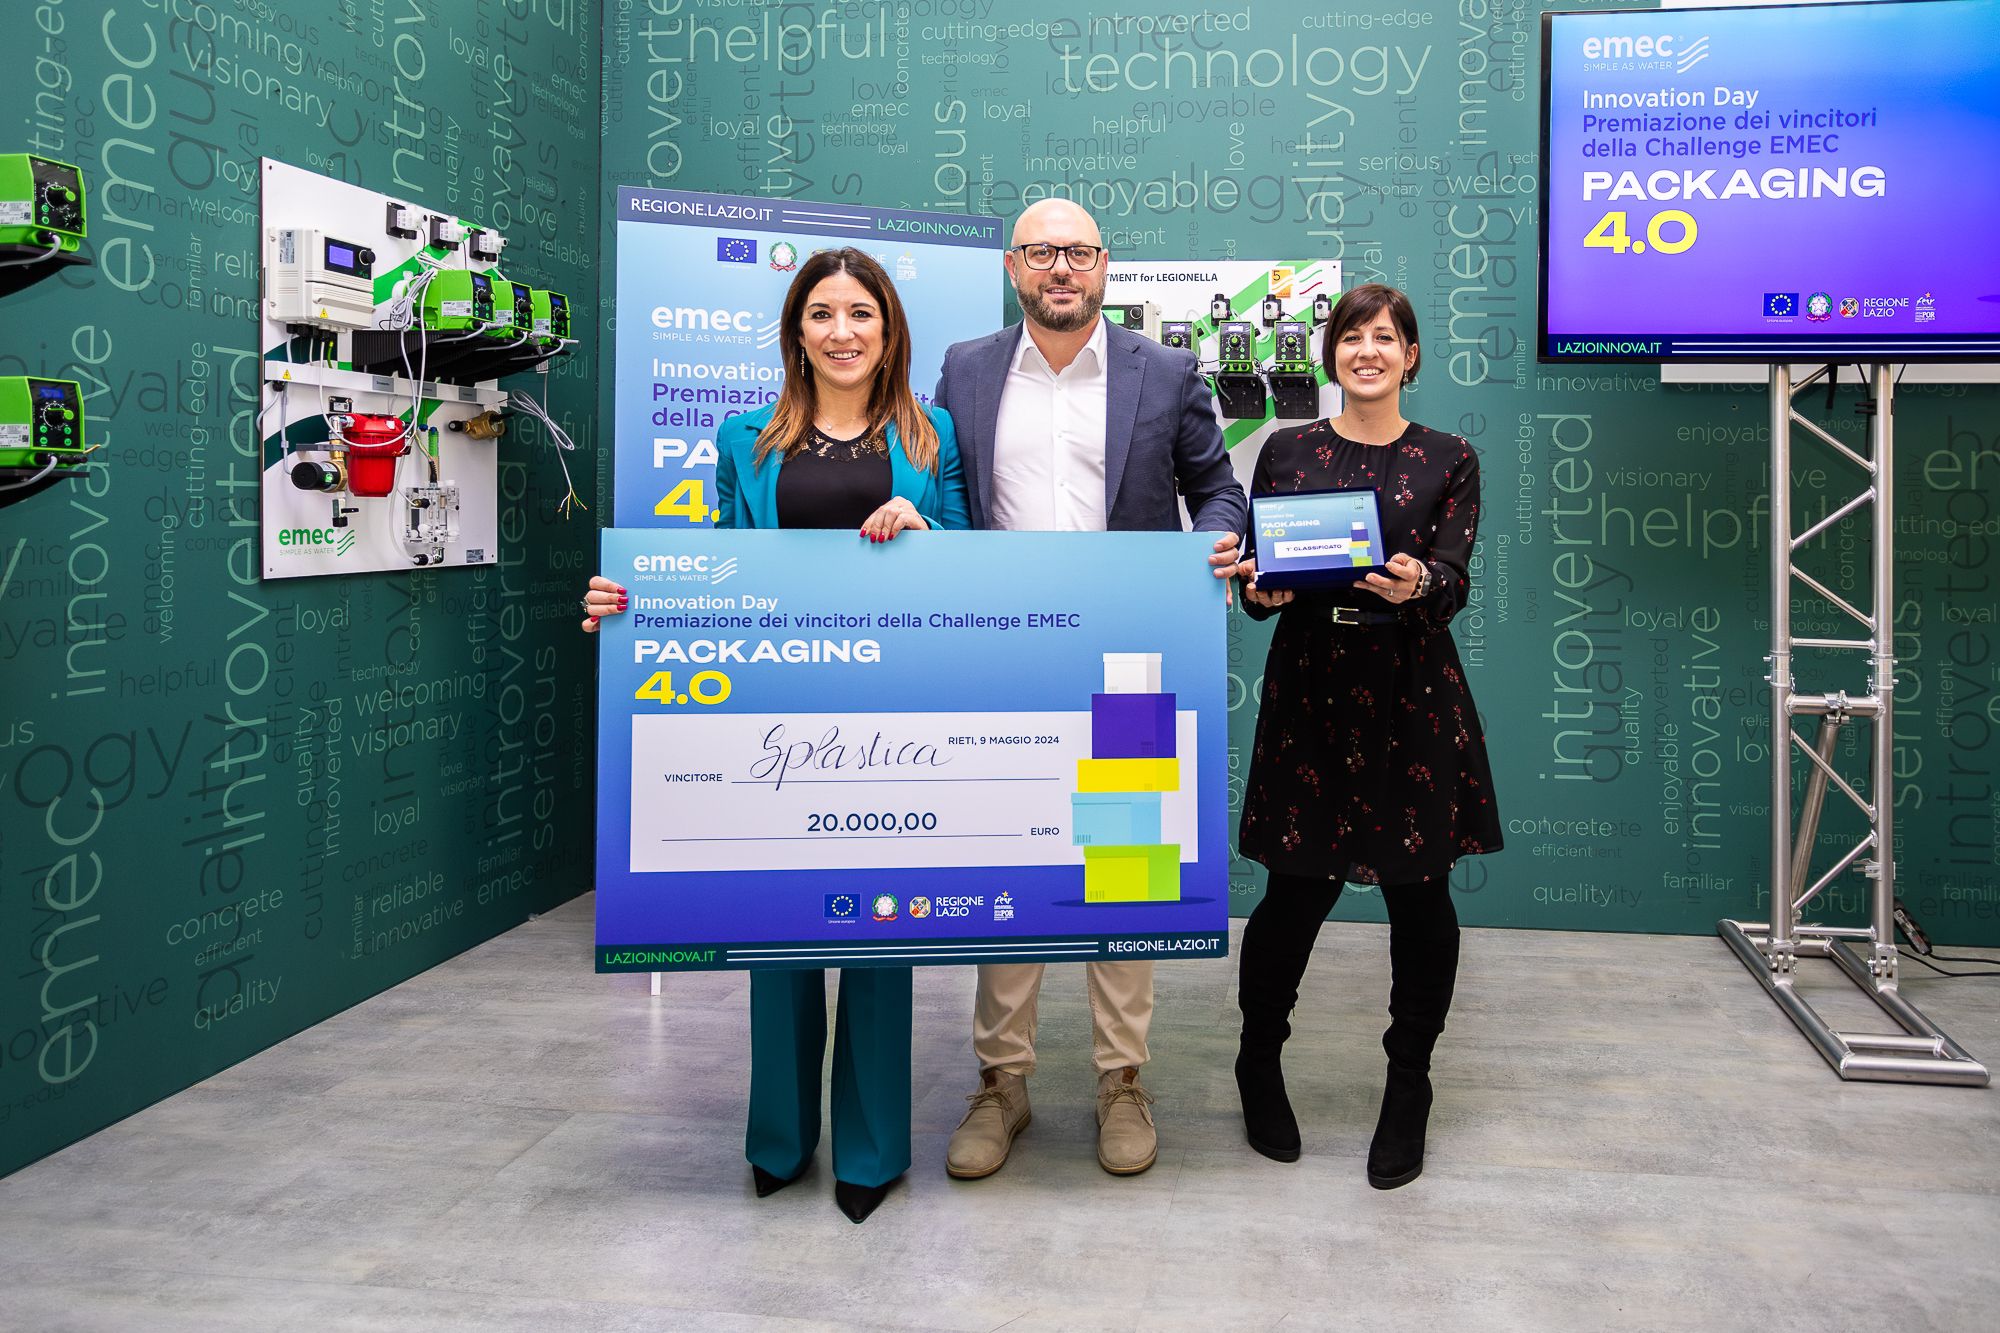 Splastica vince la open innovation challenge “Packaging 4.0”